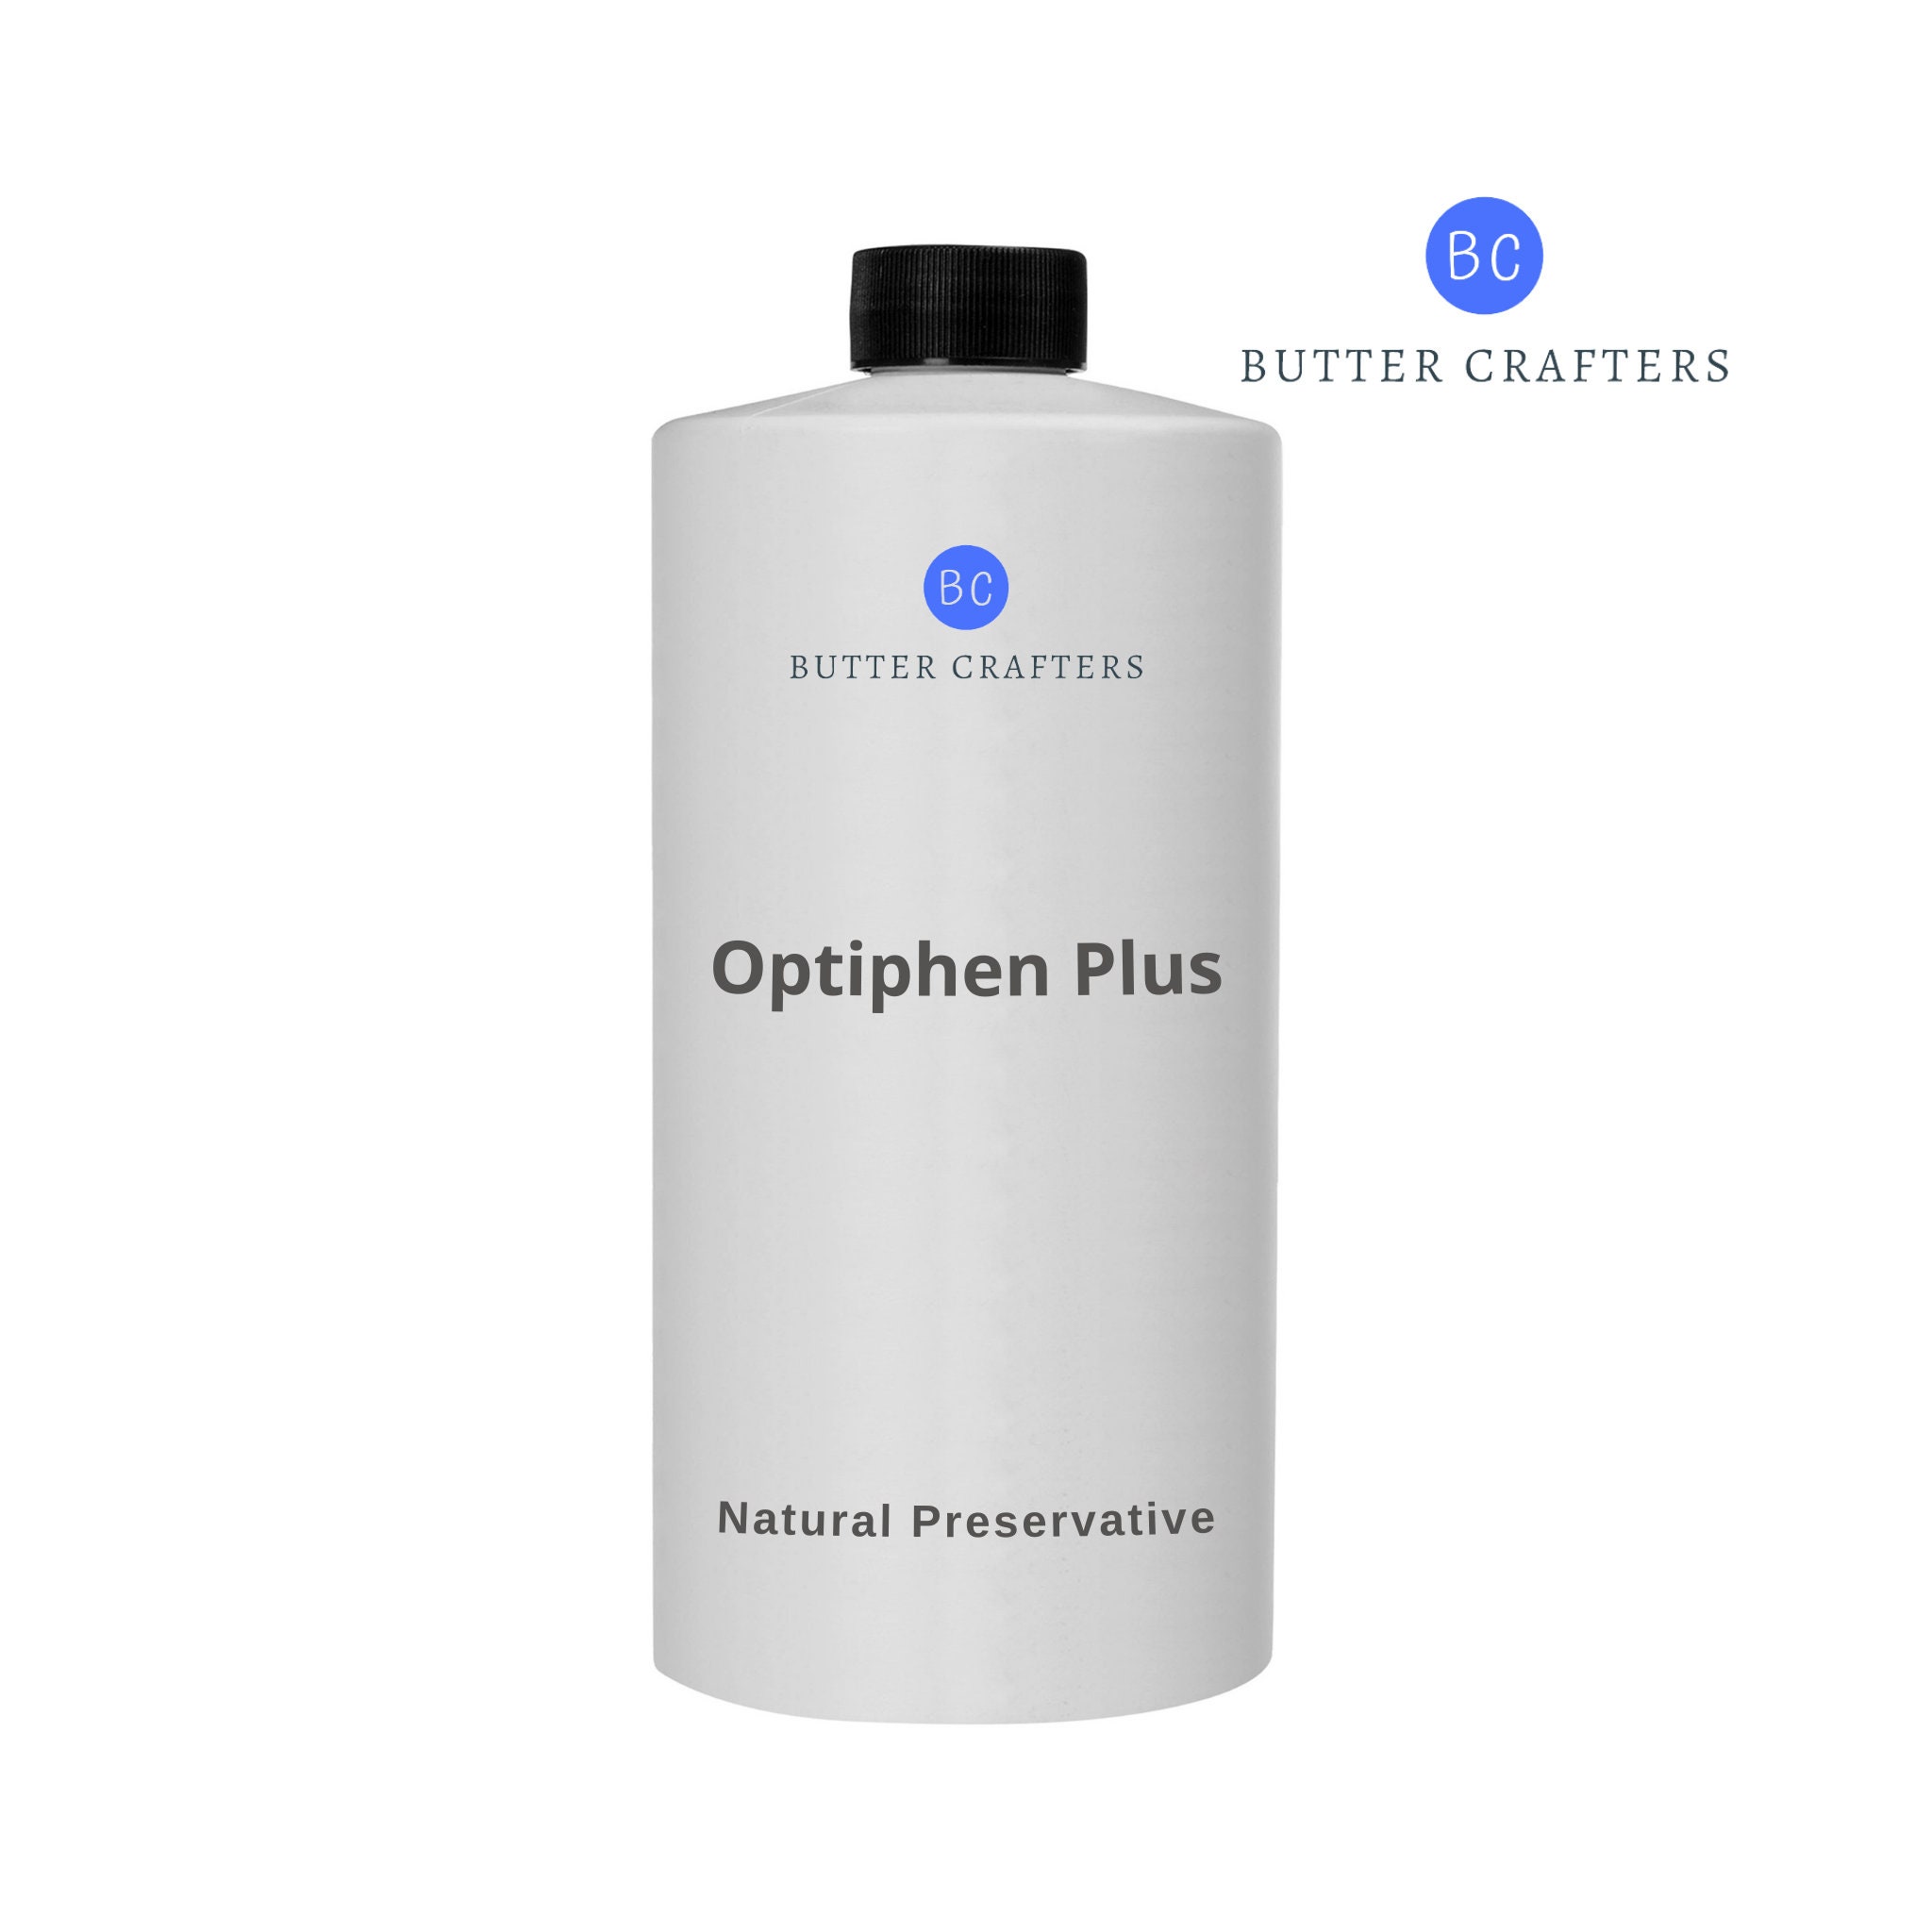 Optiphen Plus Preservative 100% Natural Paraben Free Lotion Body Wash  Shampoo Conditioner Scrub Spray Broad Spectrum Bulk Buttercrafters 